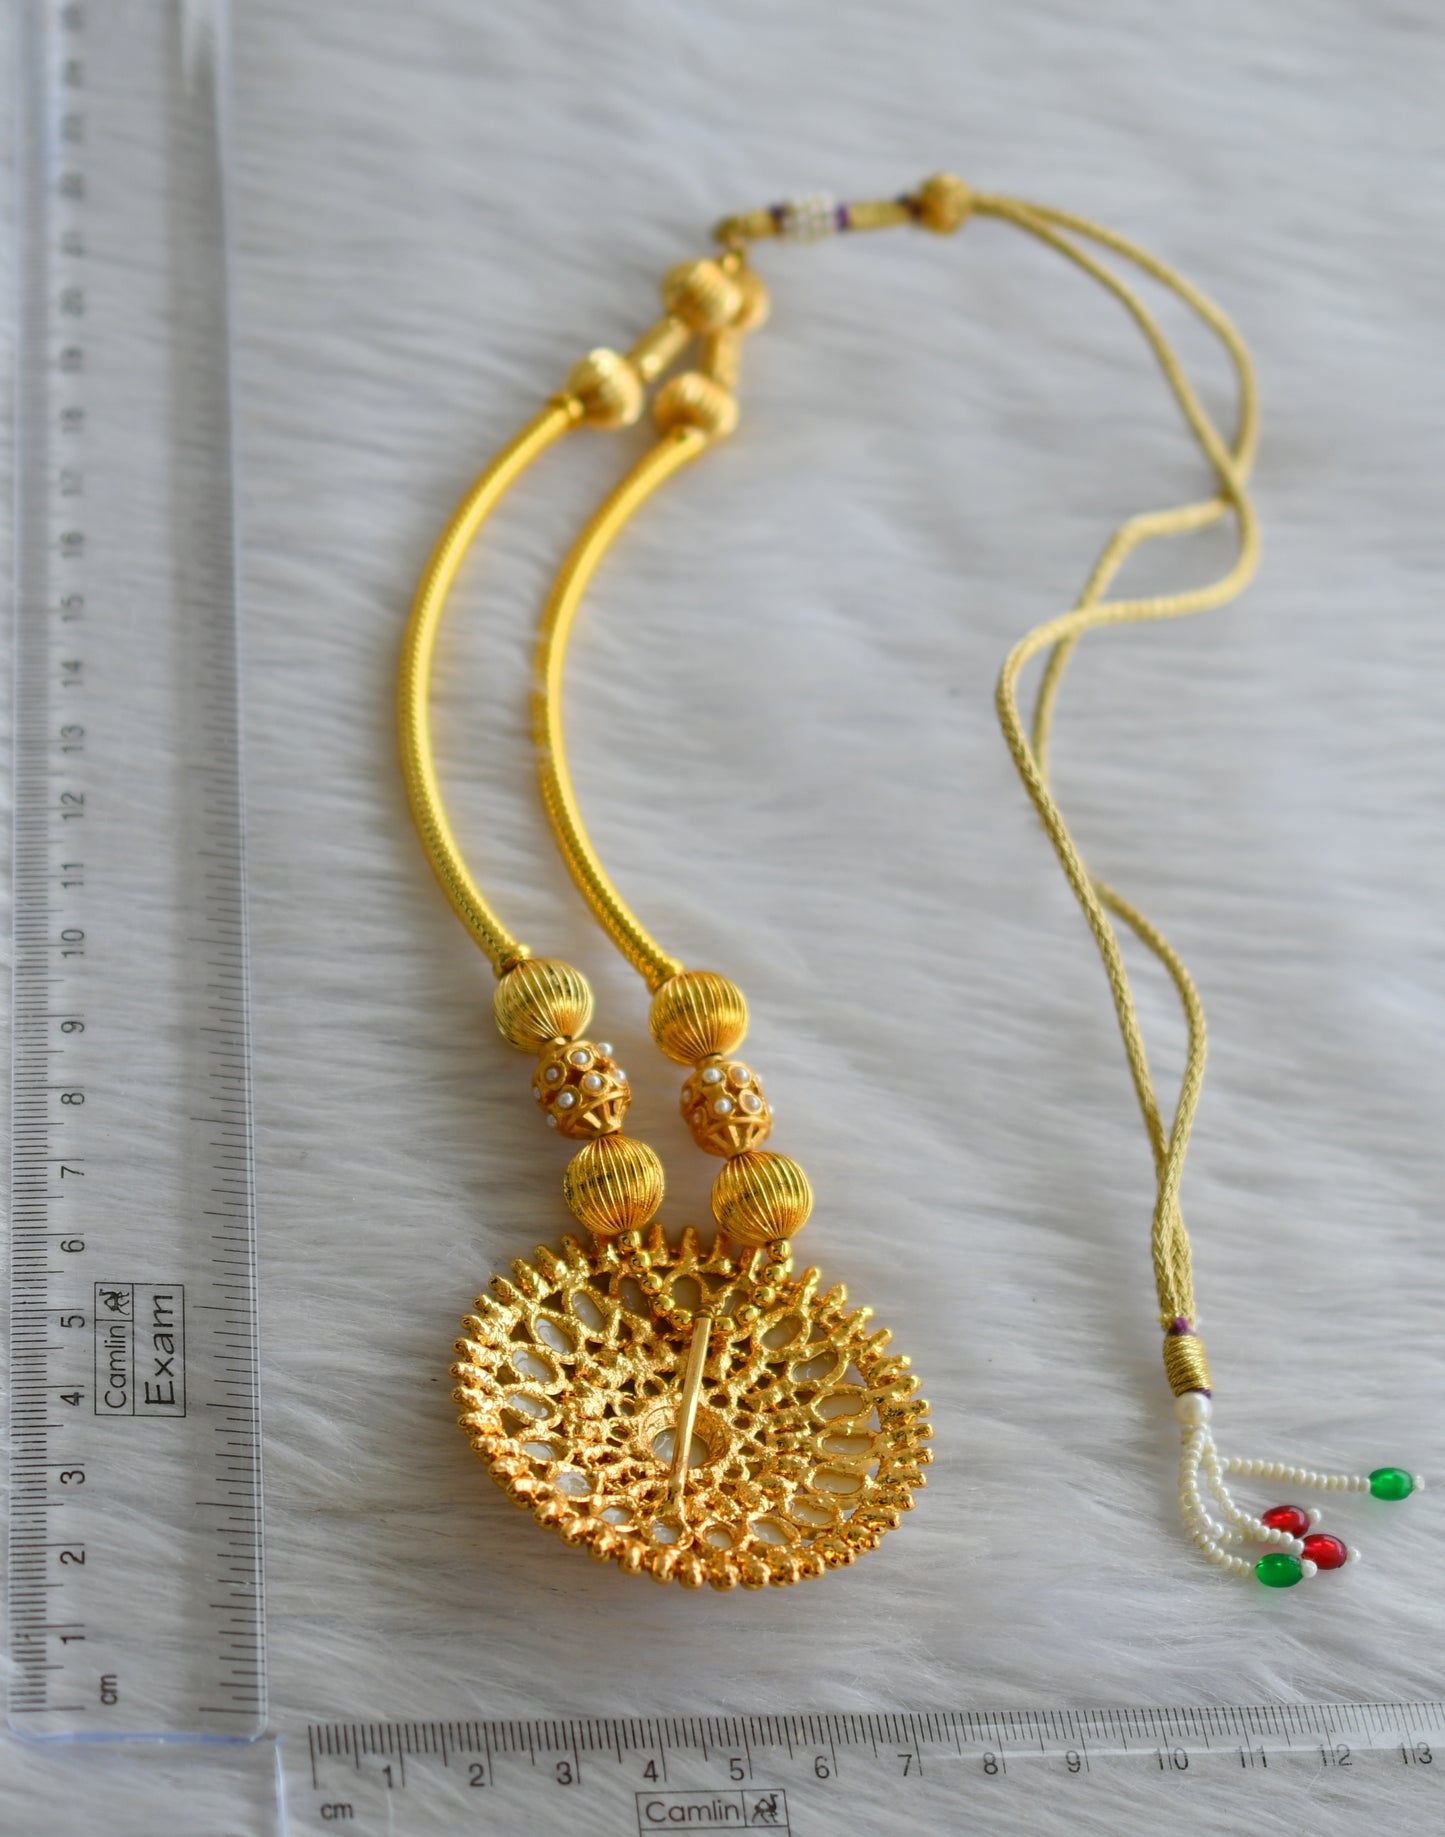 Antique gold tone round pendant pearl necklace dj-02304